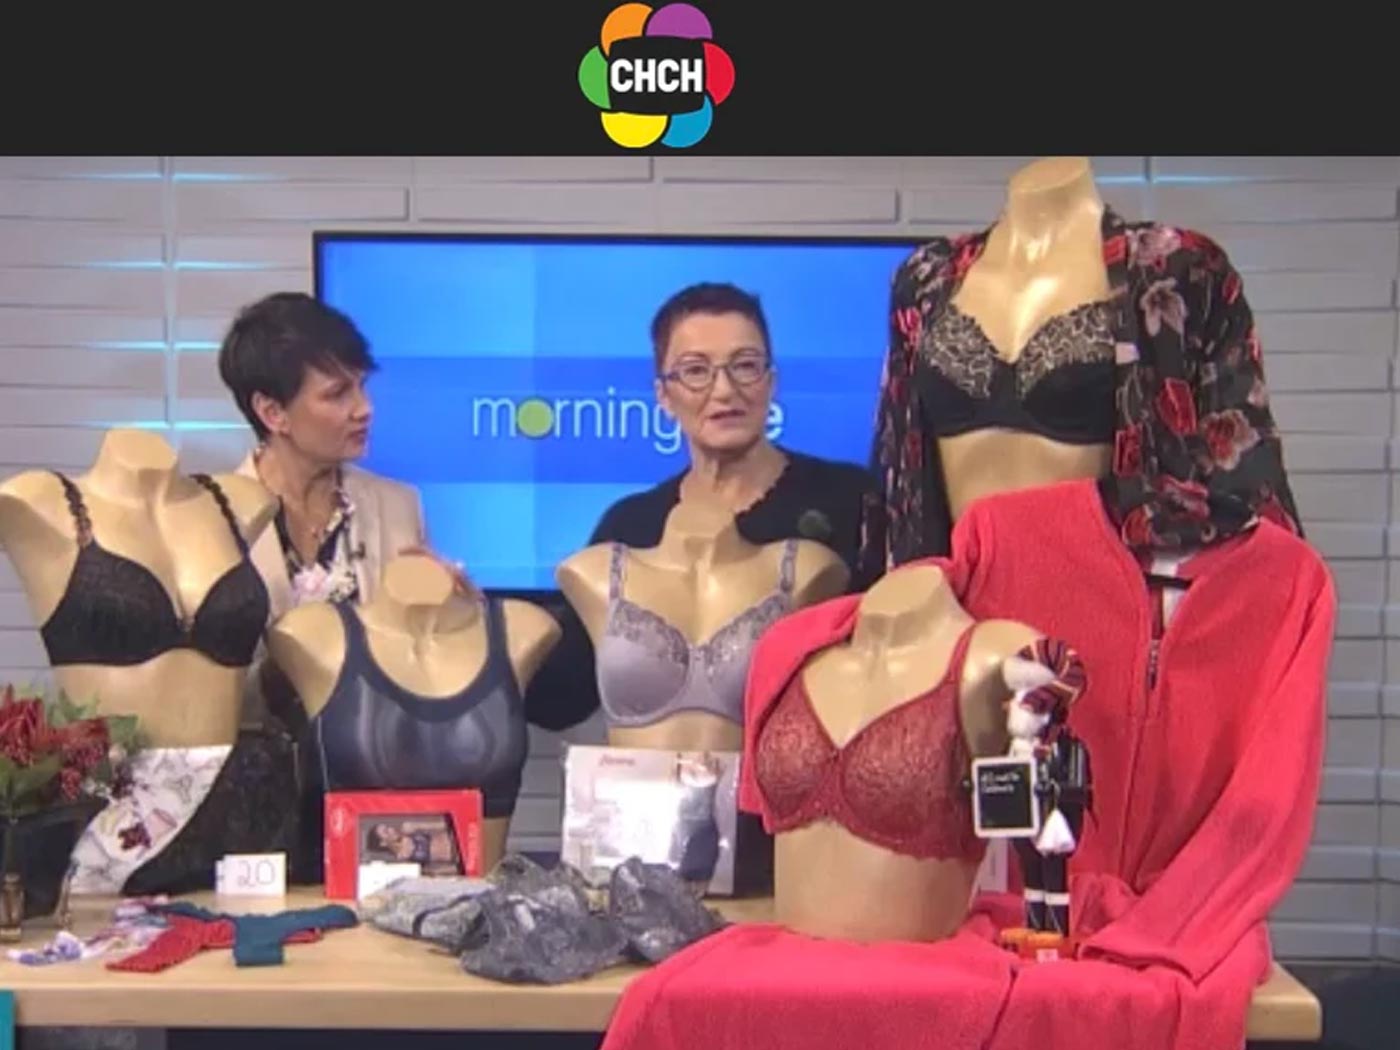 Lingerie Looks For All - CHCH Morning Live